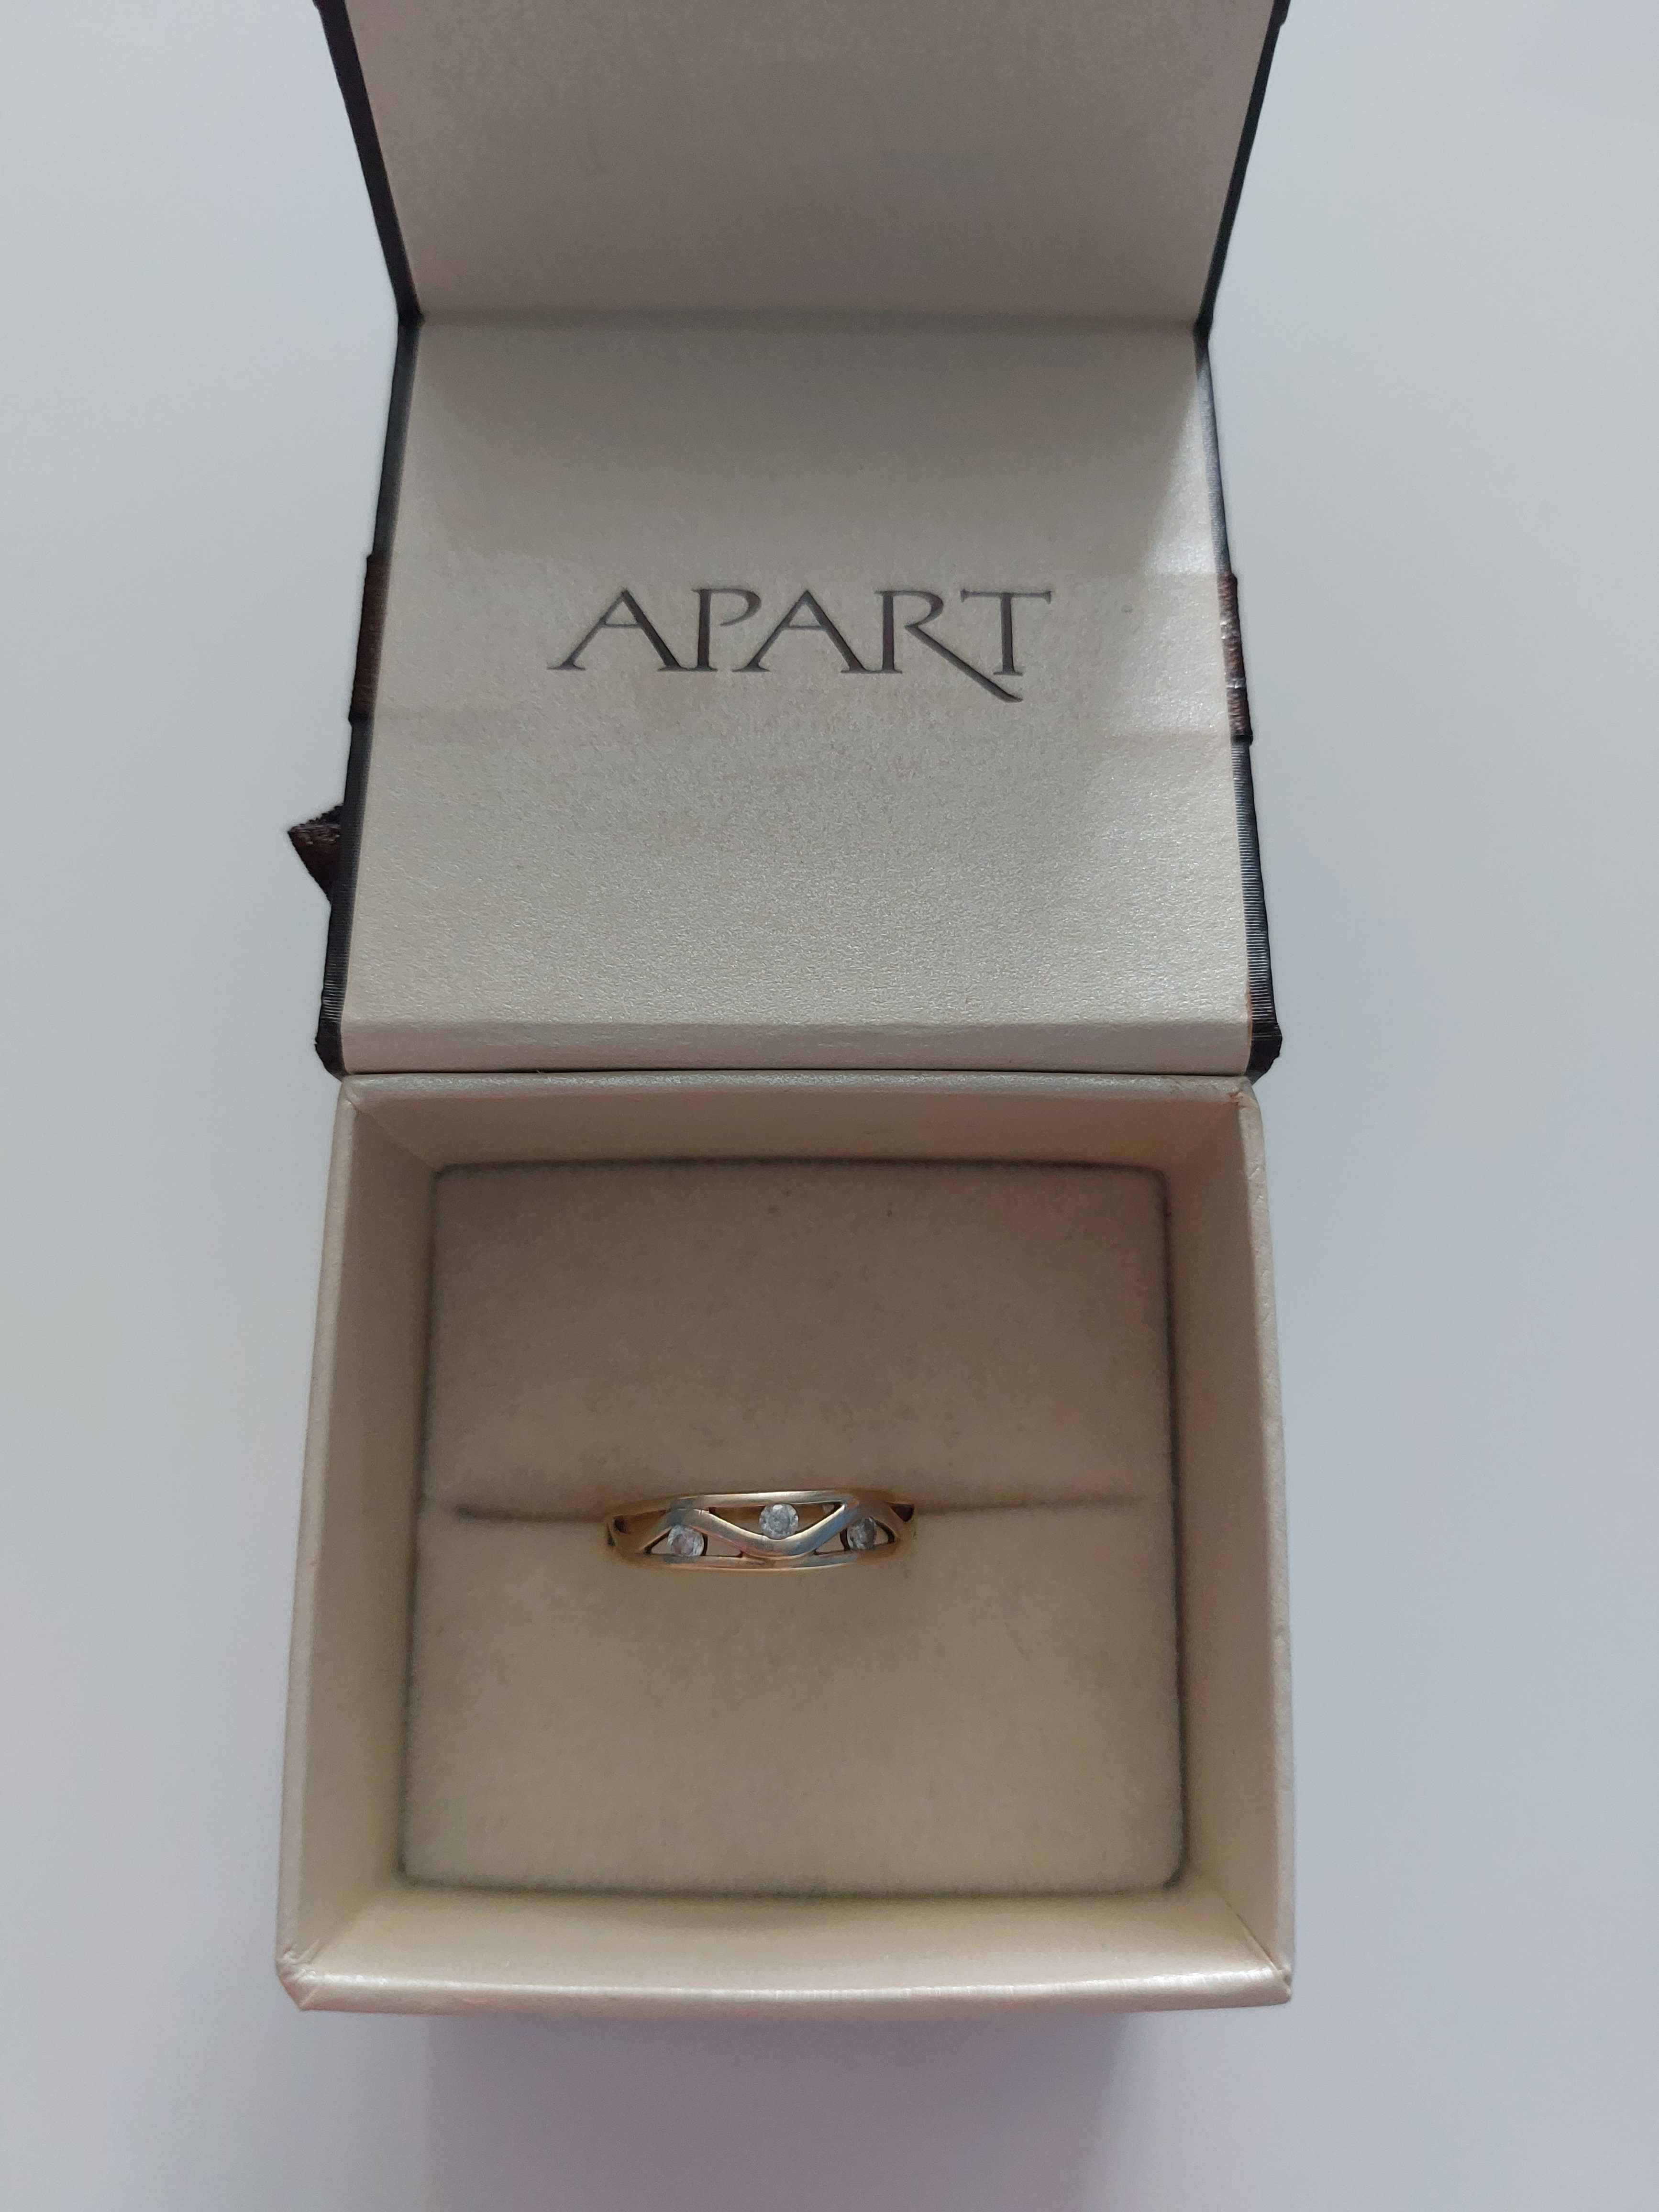 Złoty pierścionek Aparat 333, 19,5mm